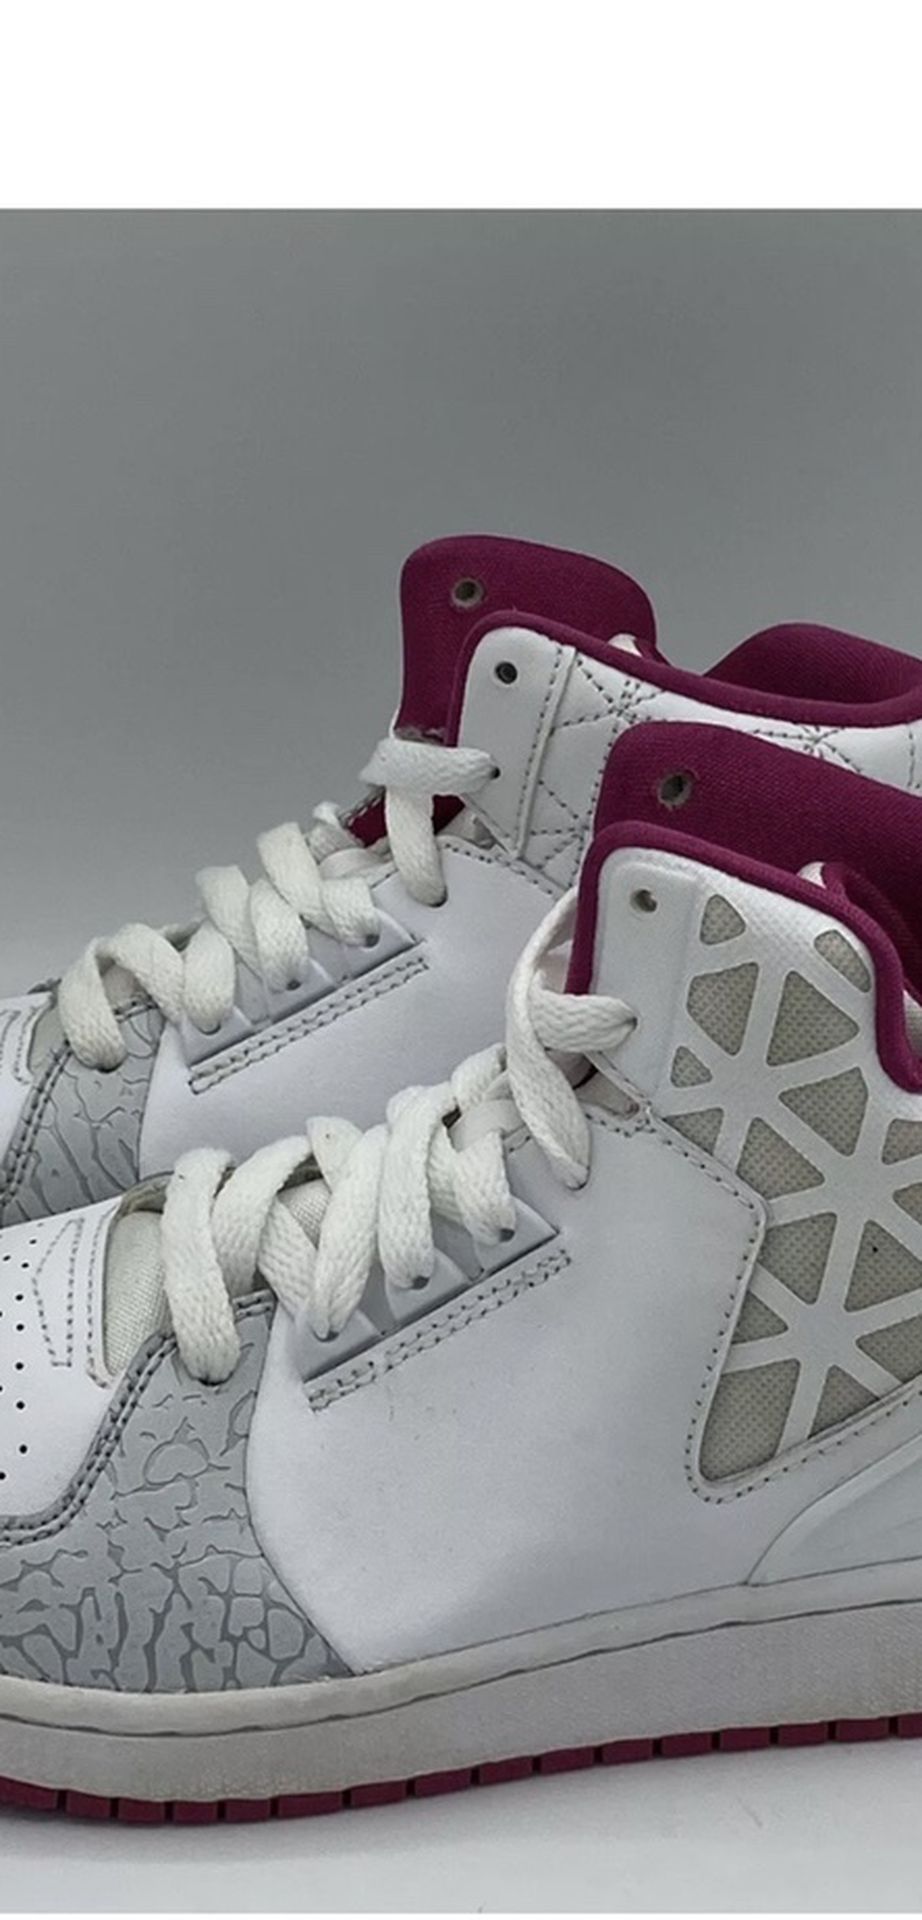 Nike Air Jordan Flight 3 Premium White Fuchsia Shoes Size 5Y EUC for Sale in Vacaville, CA - OfferUp